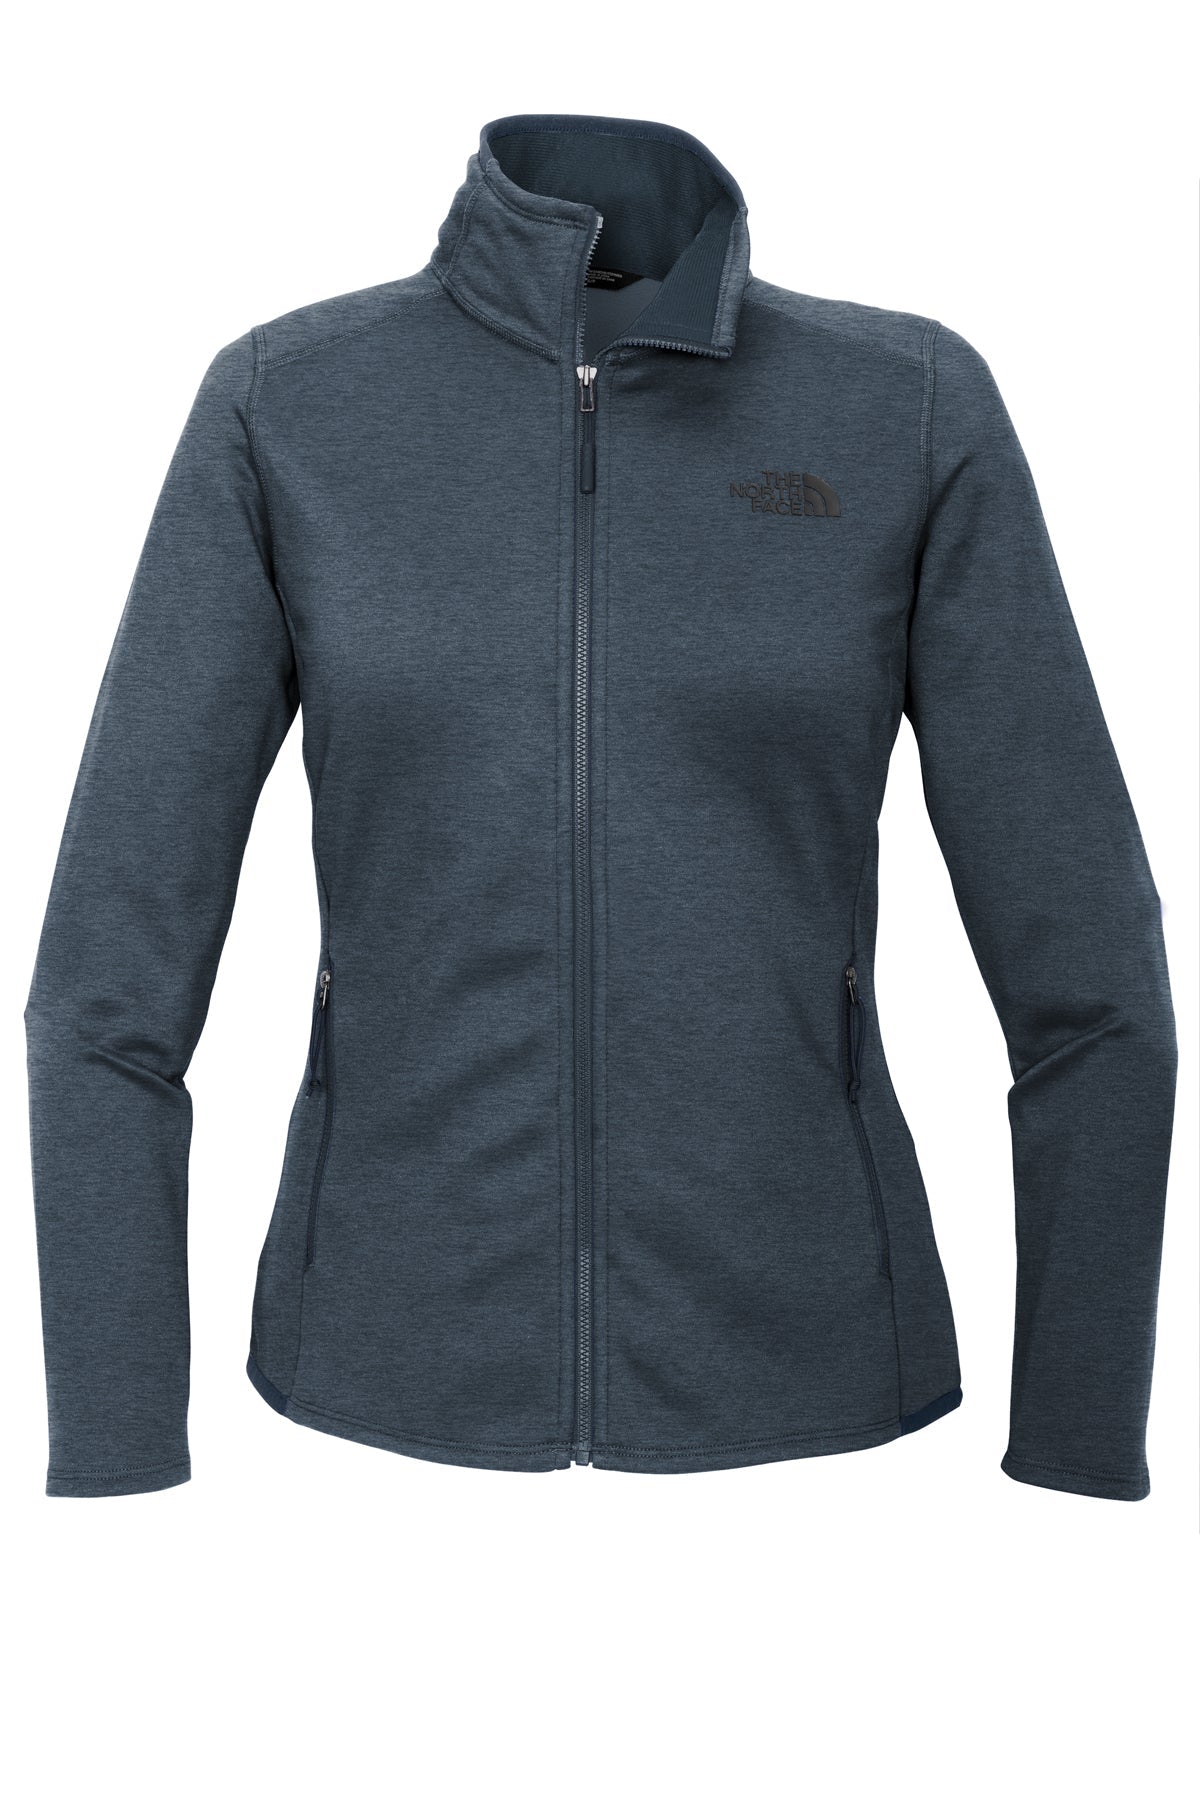 NF0A7V62 The North Face ® Ladies Skyline Full-Zip Fleece Jacket